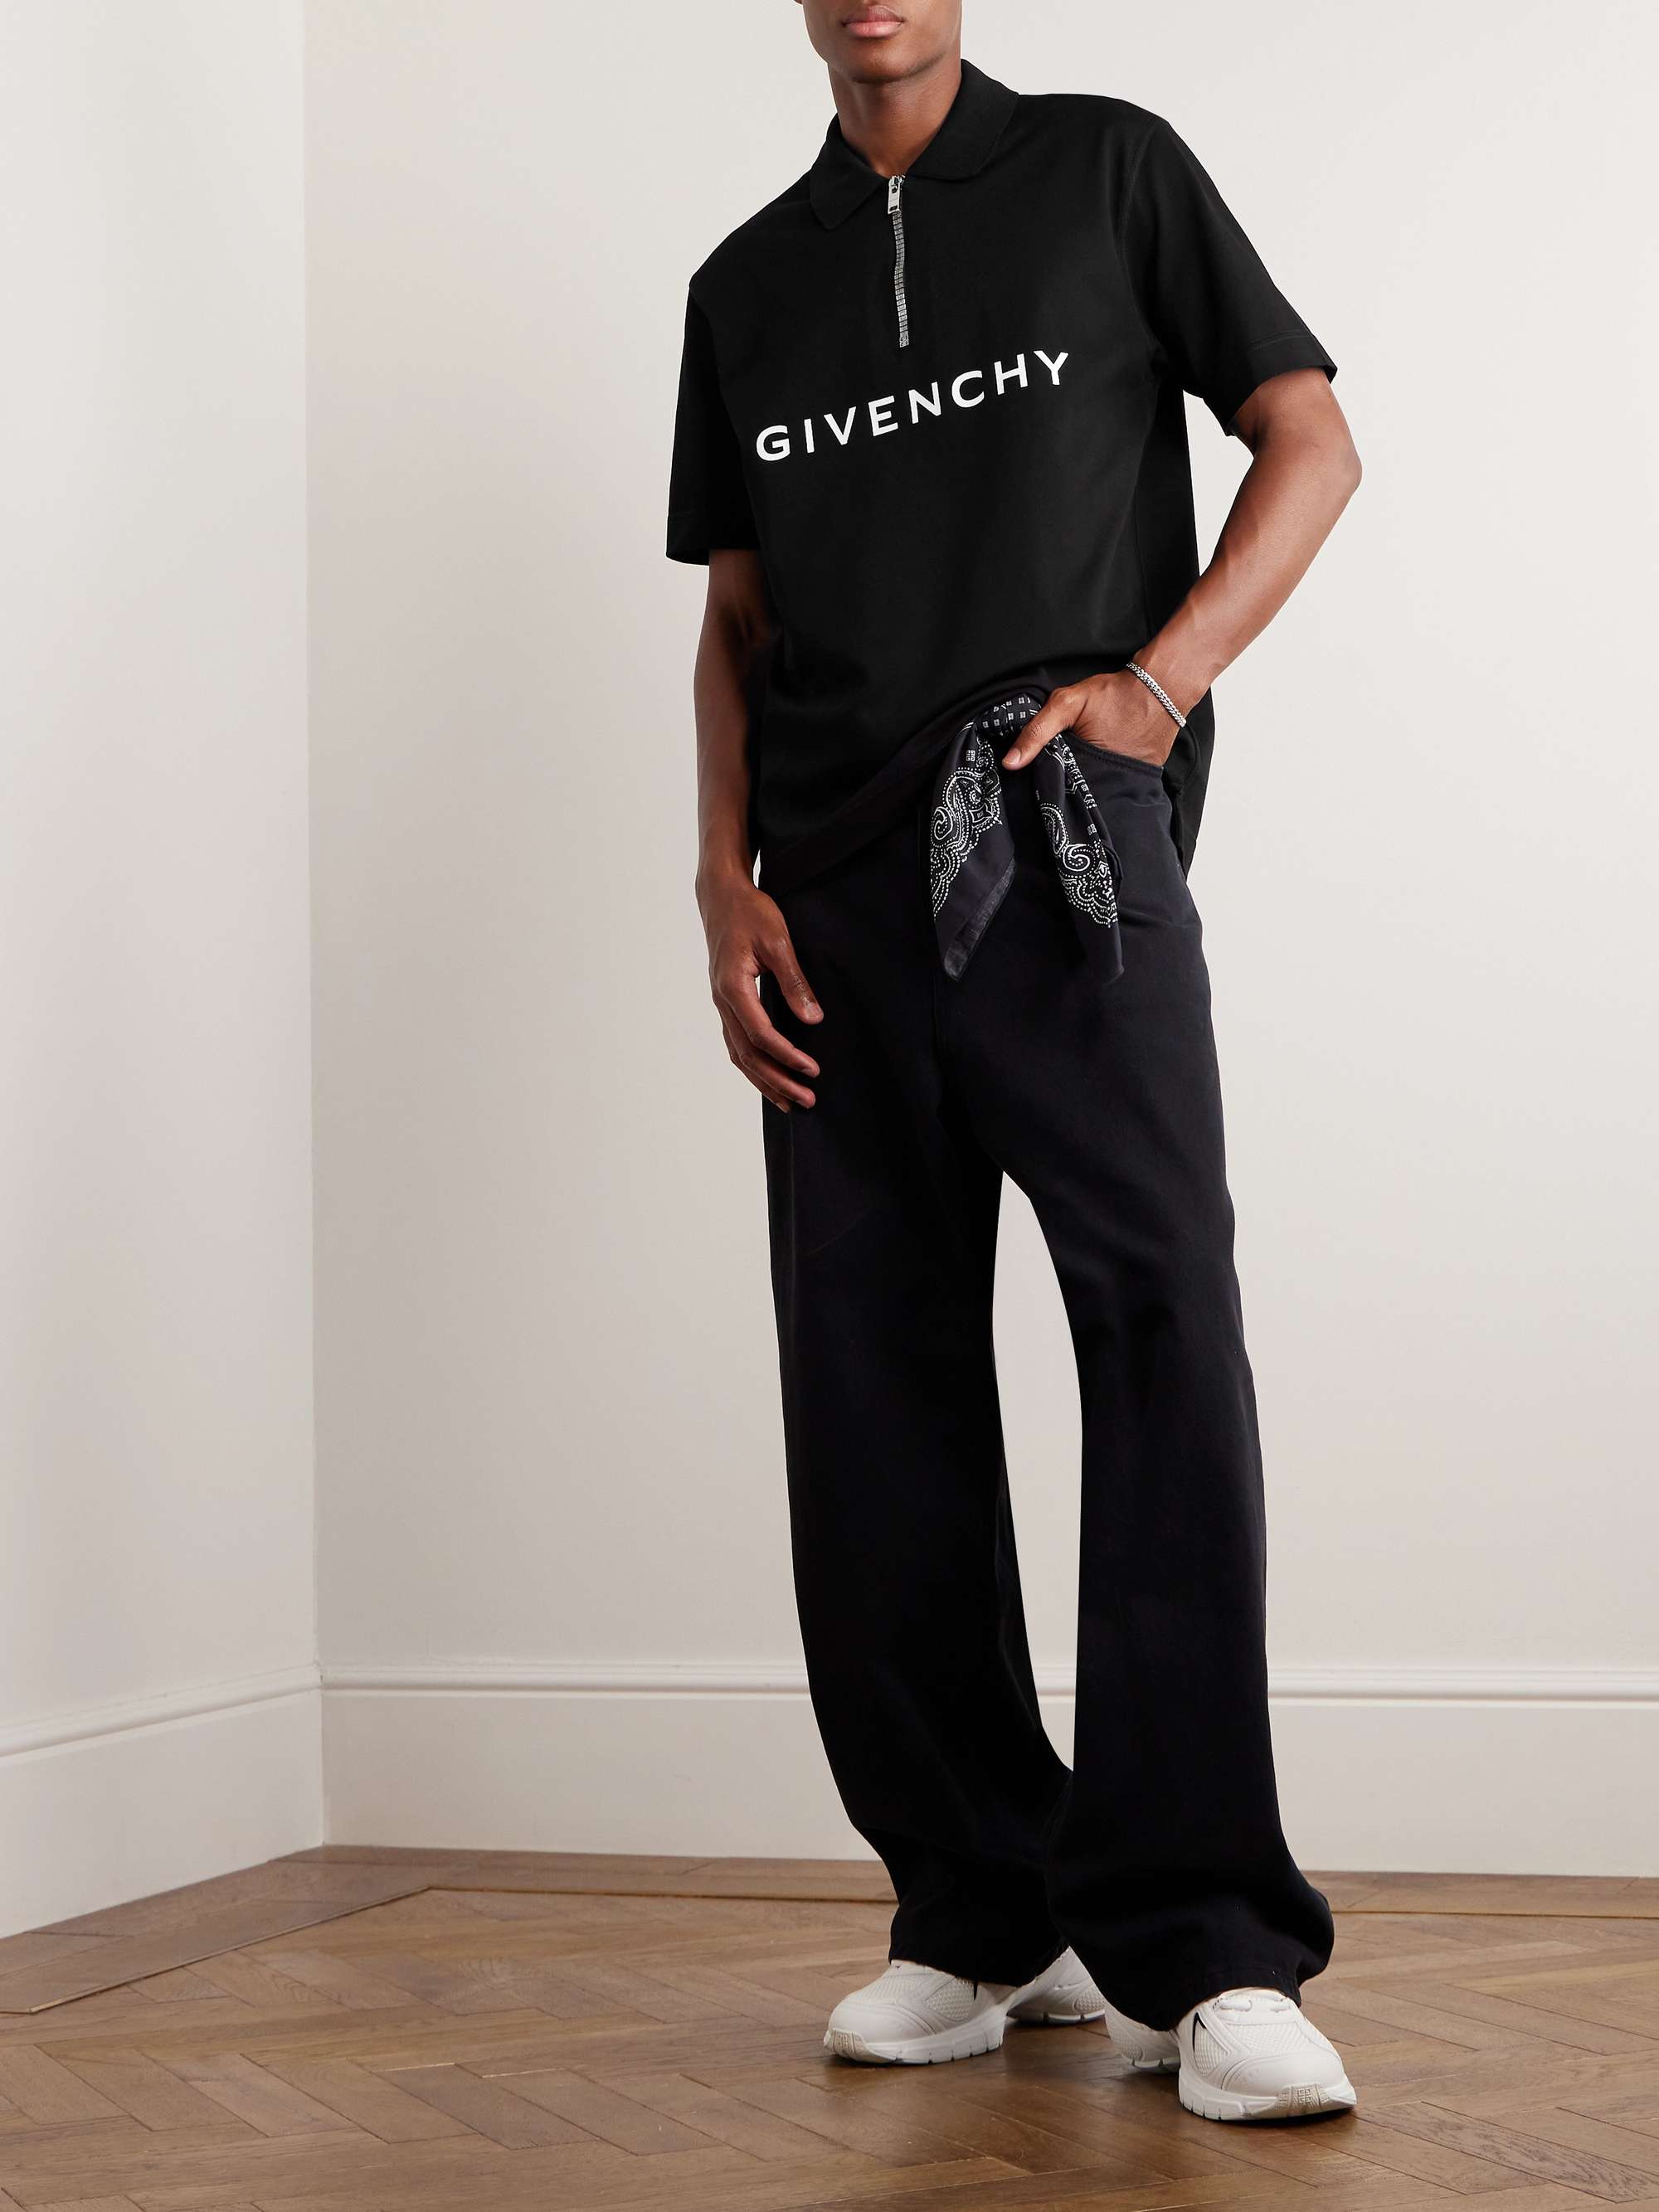 Givenchy Polo Shirt blog.knak.jp